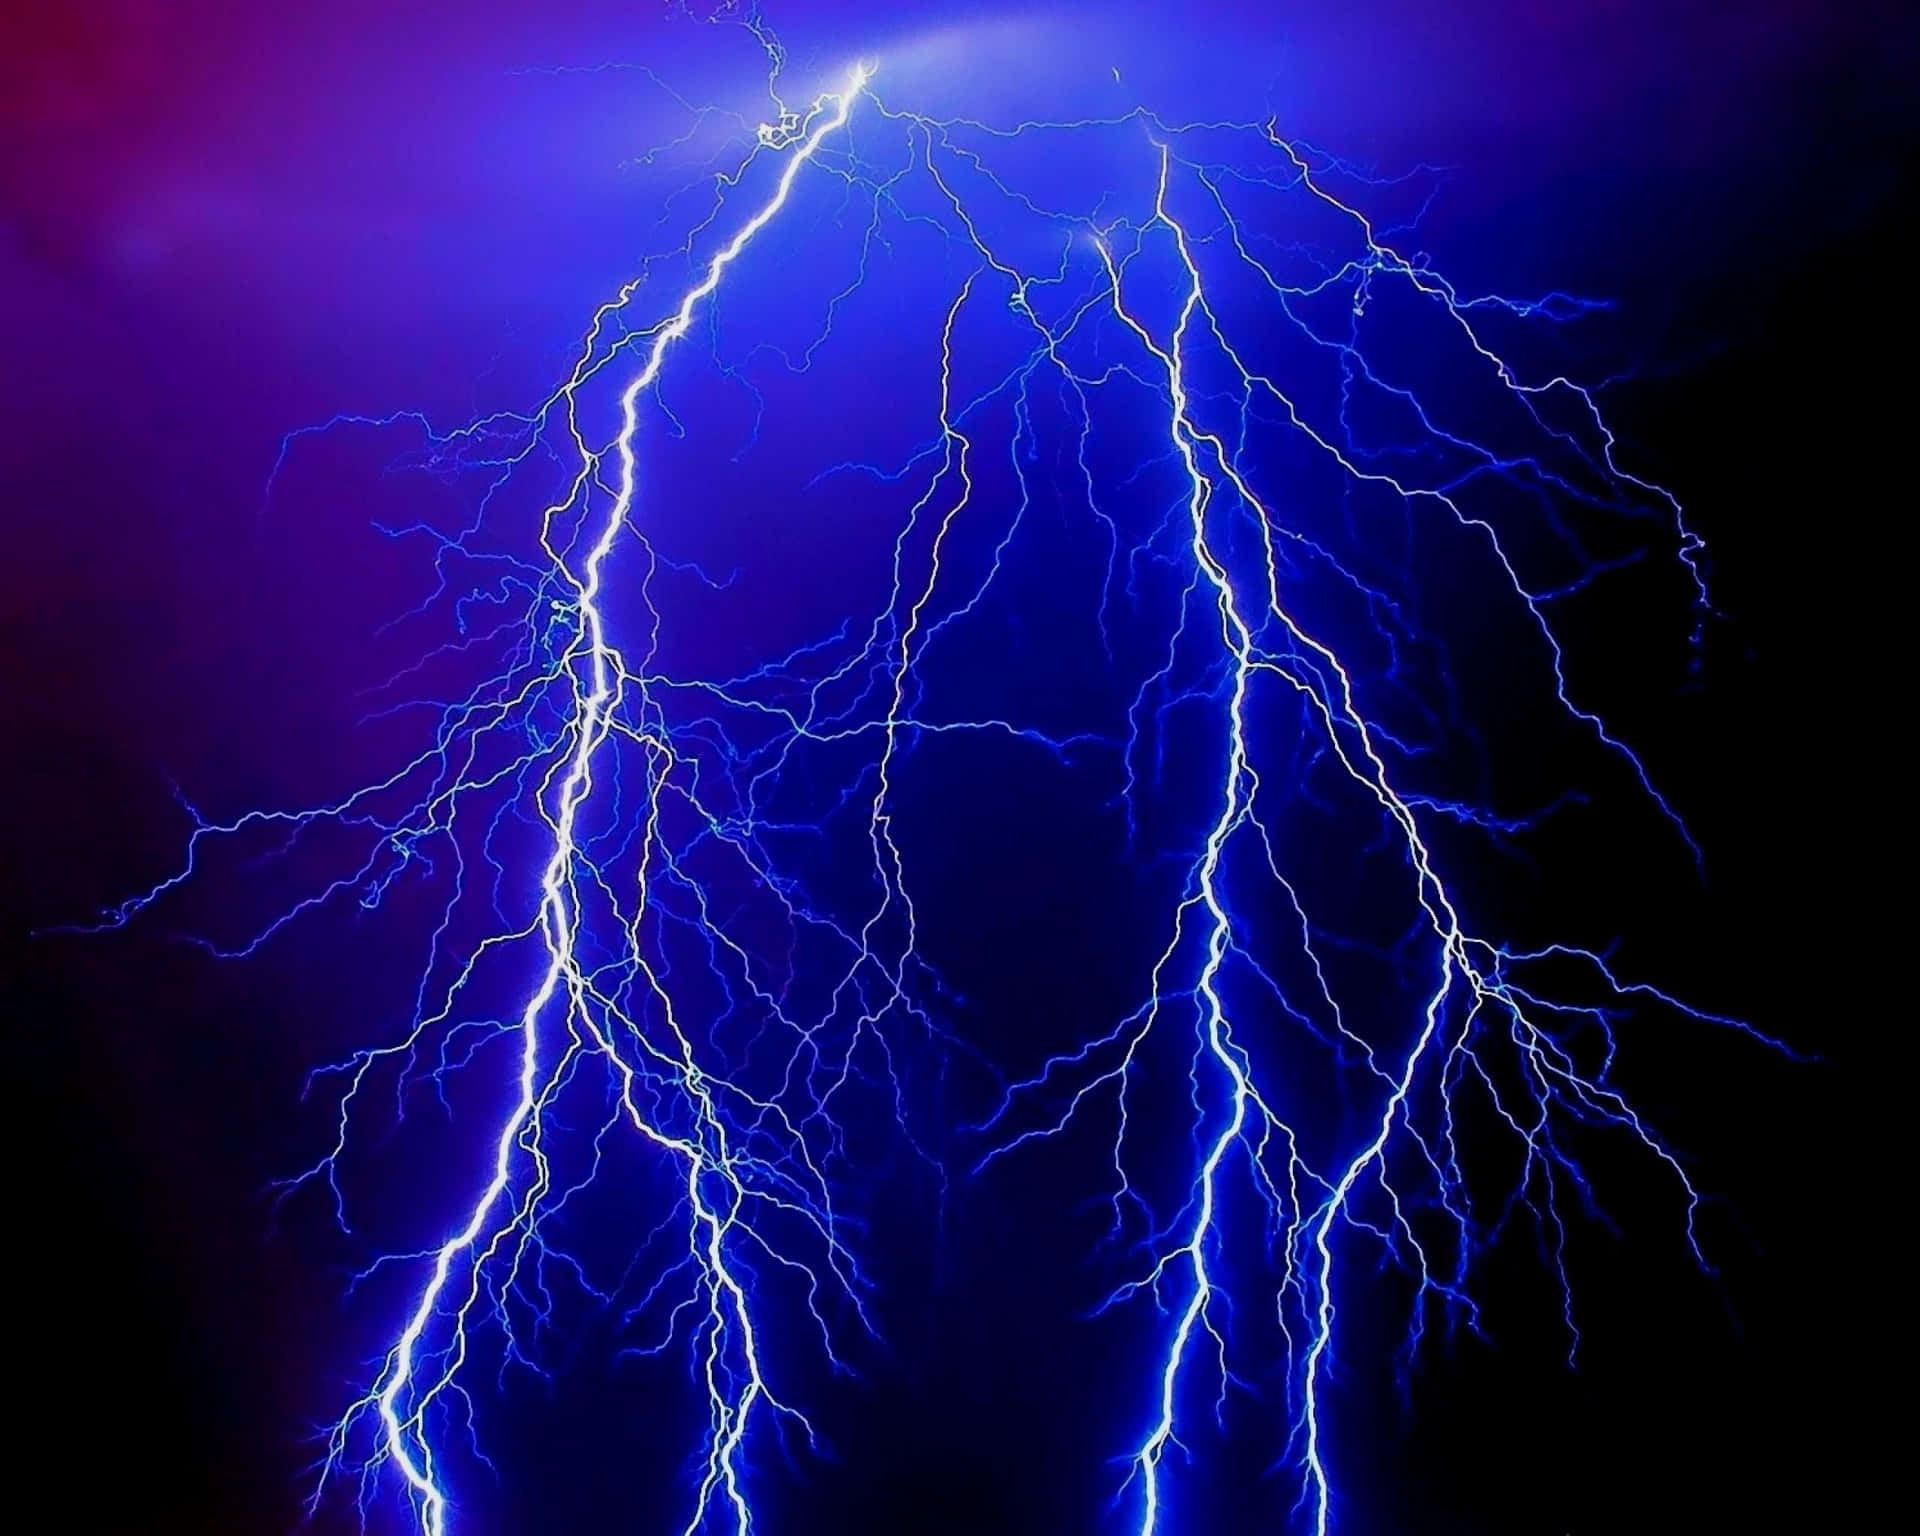 Blue lightning bolts electrifying the night sky.